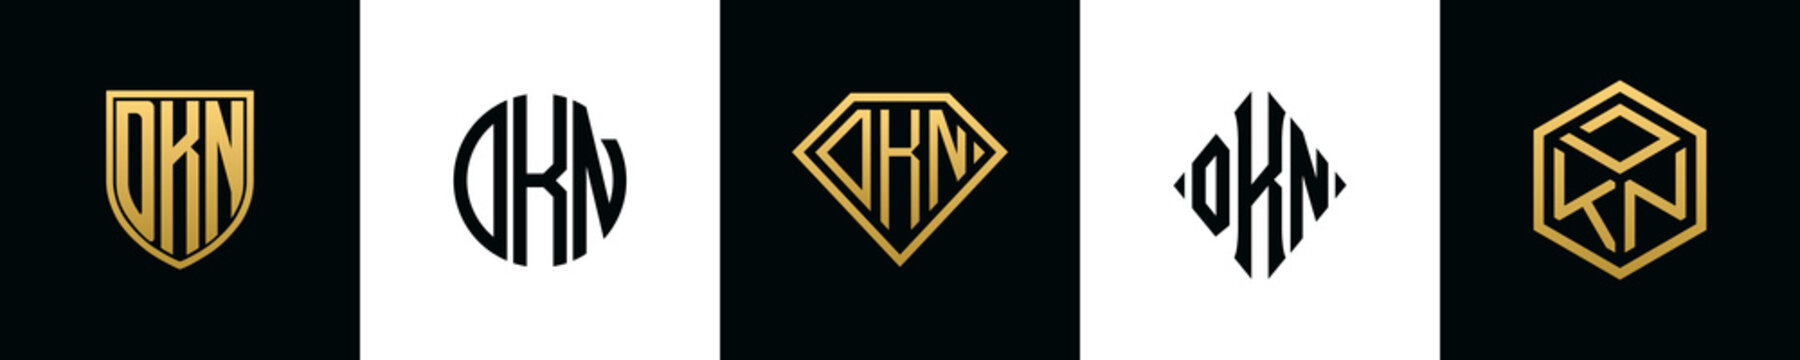 Initial letters DKN logo designs Bundle